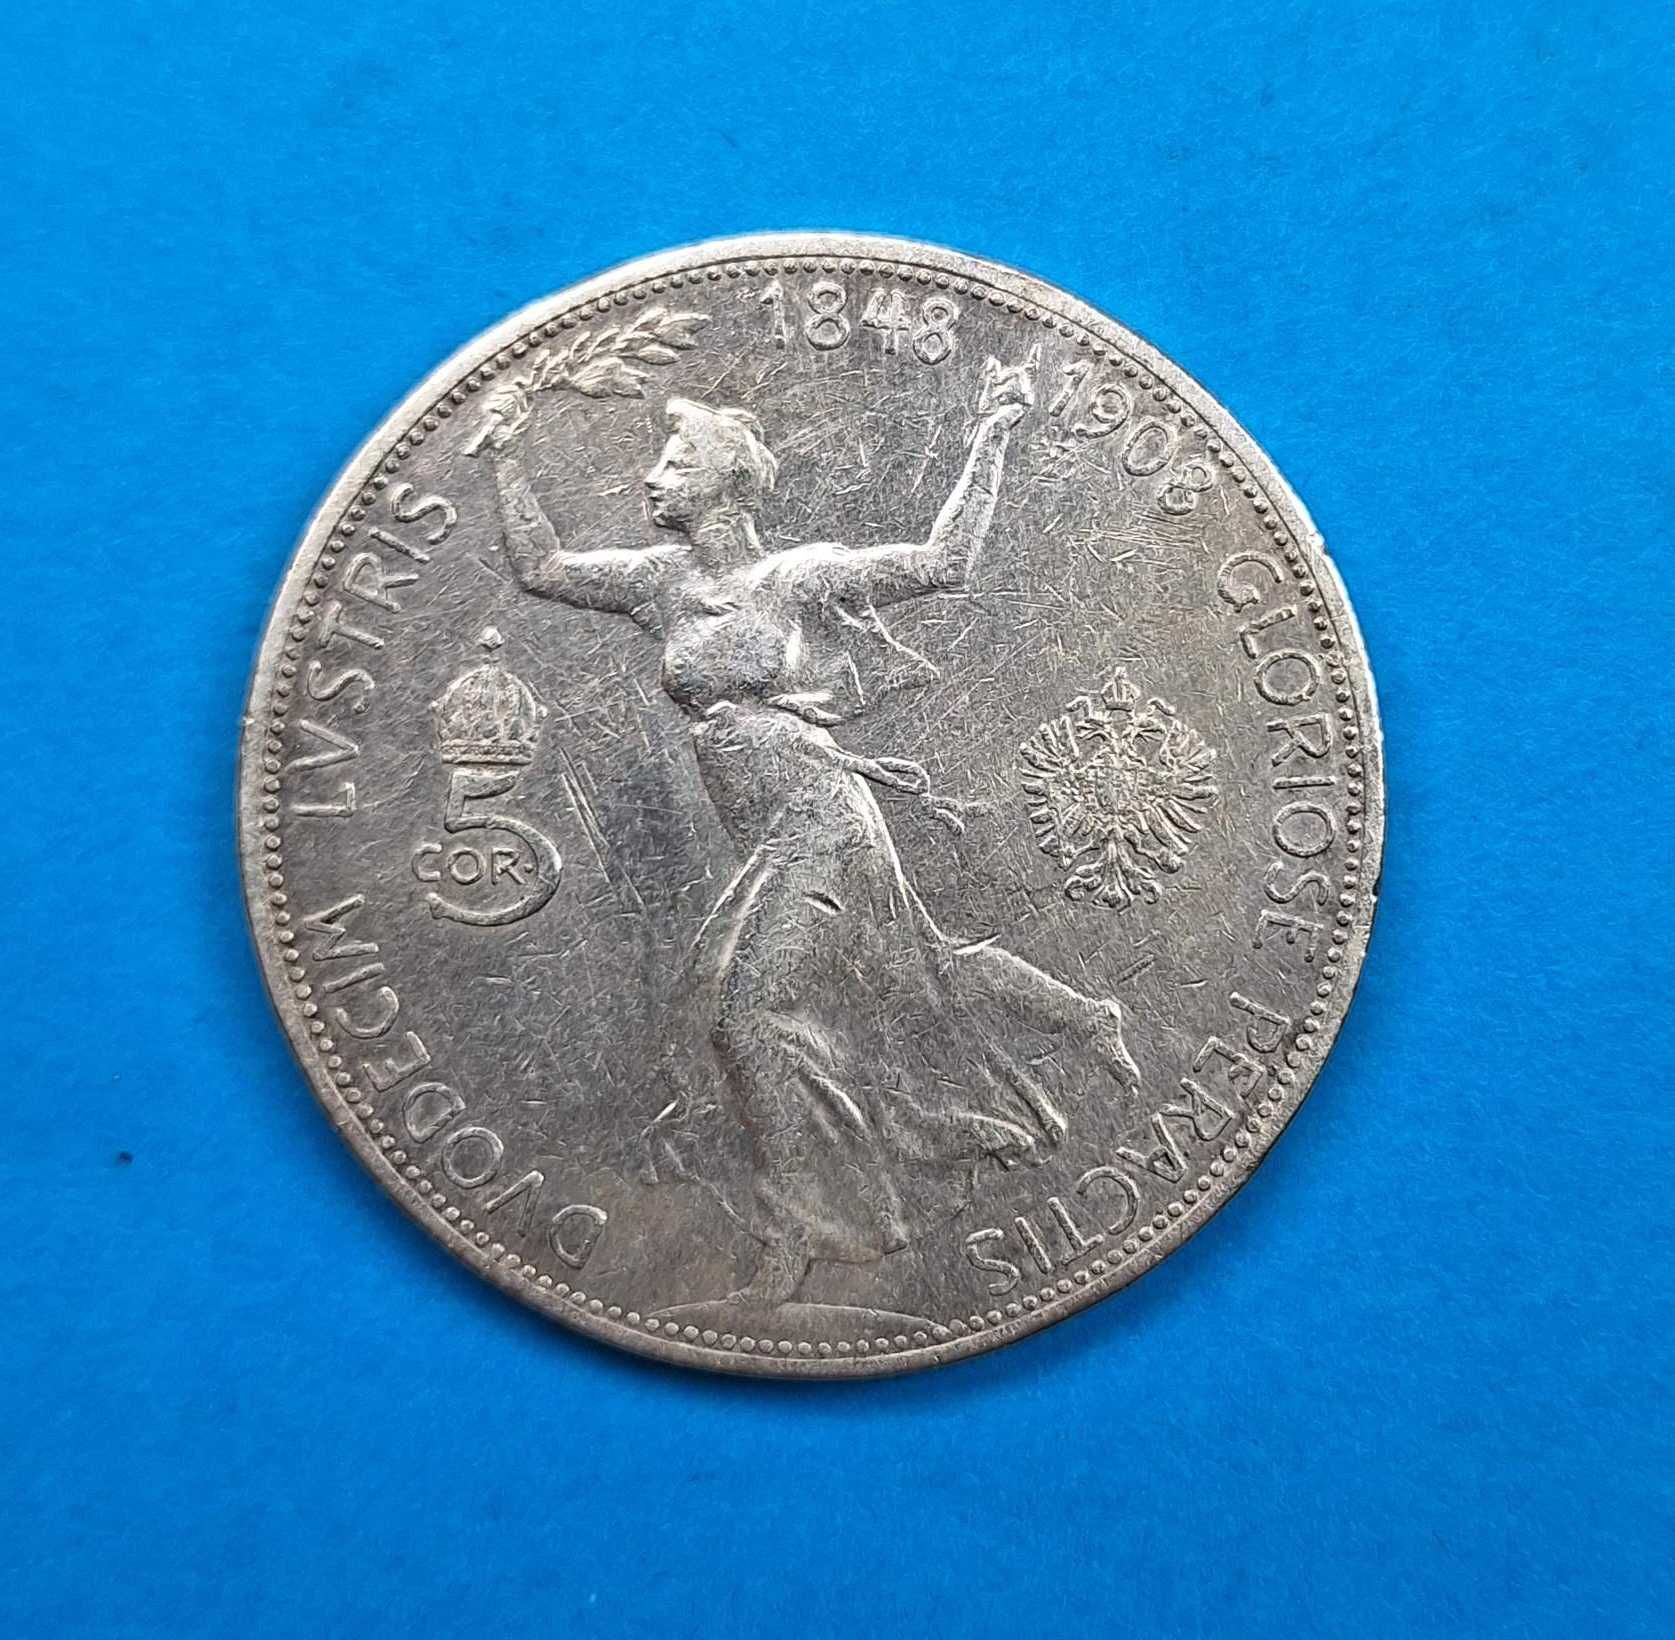 Austria 5 koron rok 1908, 60 lat panowania, bdb stan, srebro 0,900